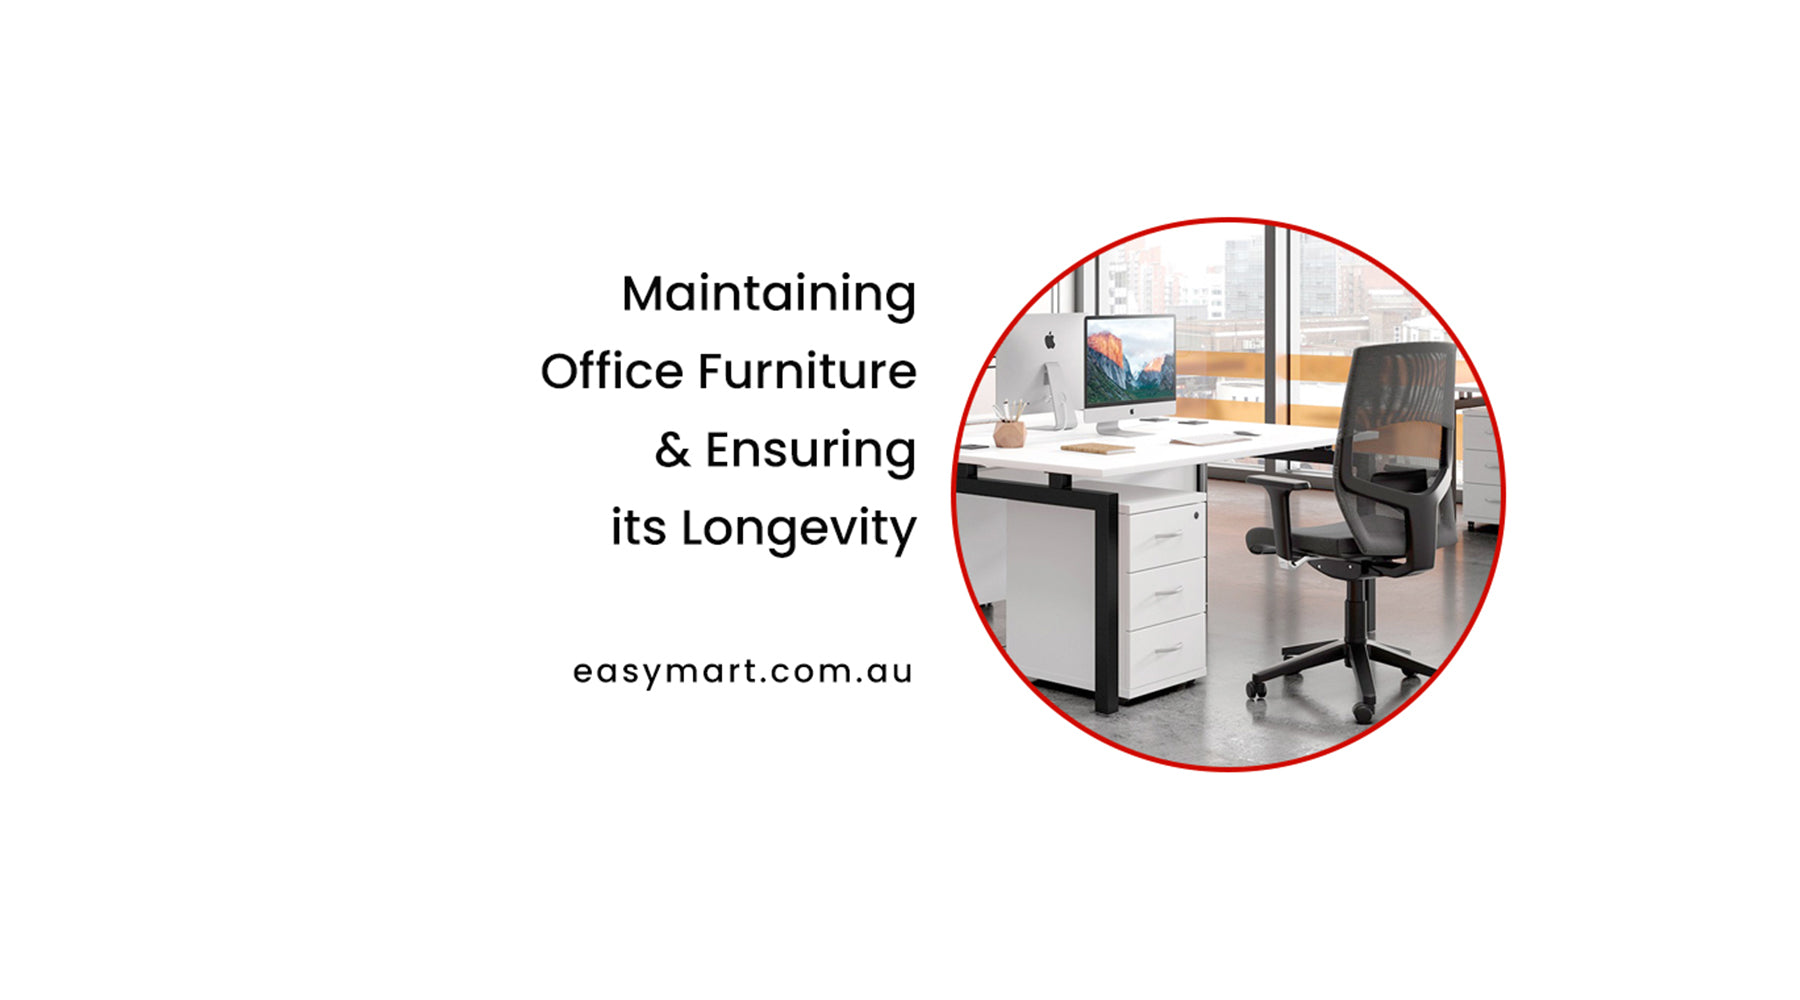 Maintaining Office Furniture & Ensuring its Longevity